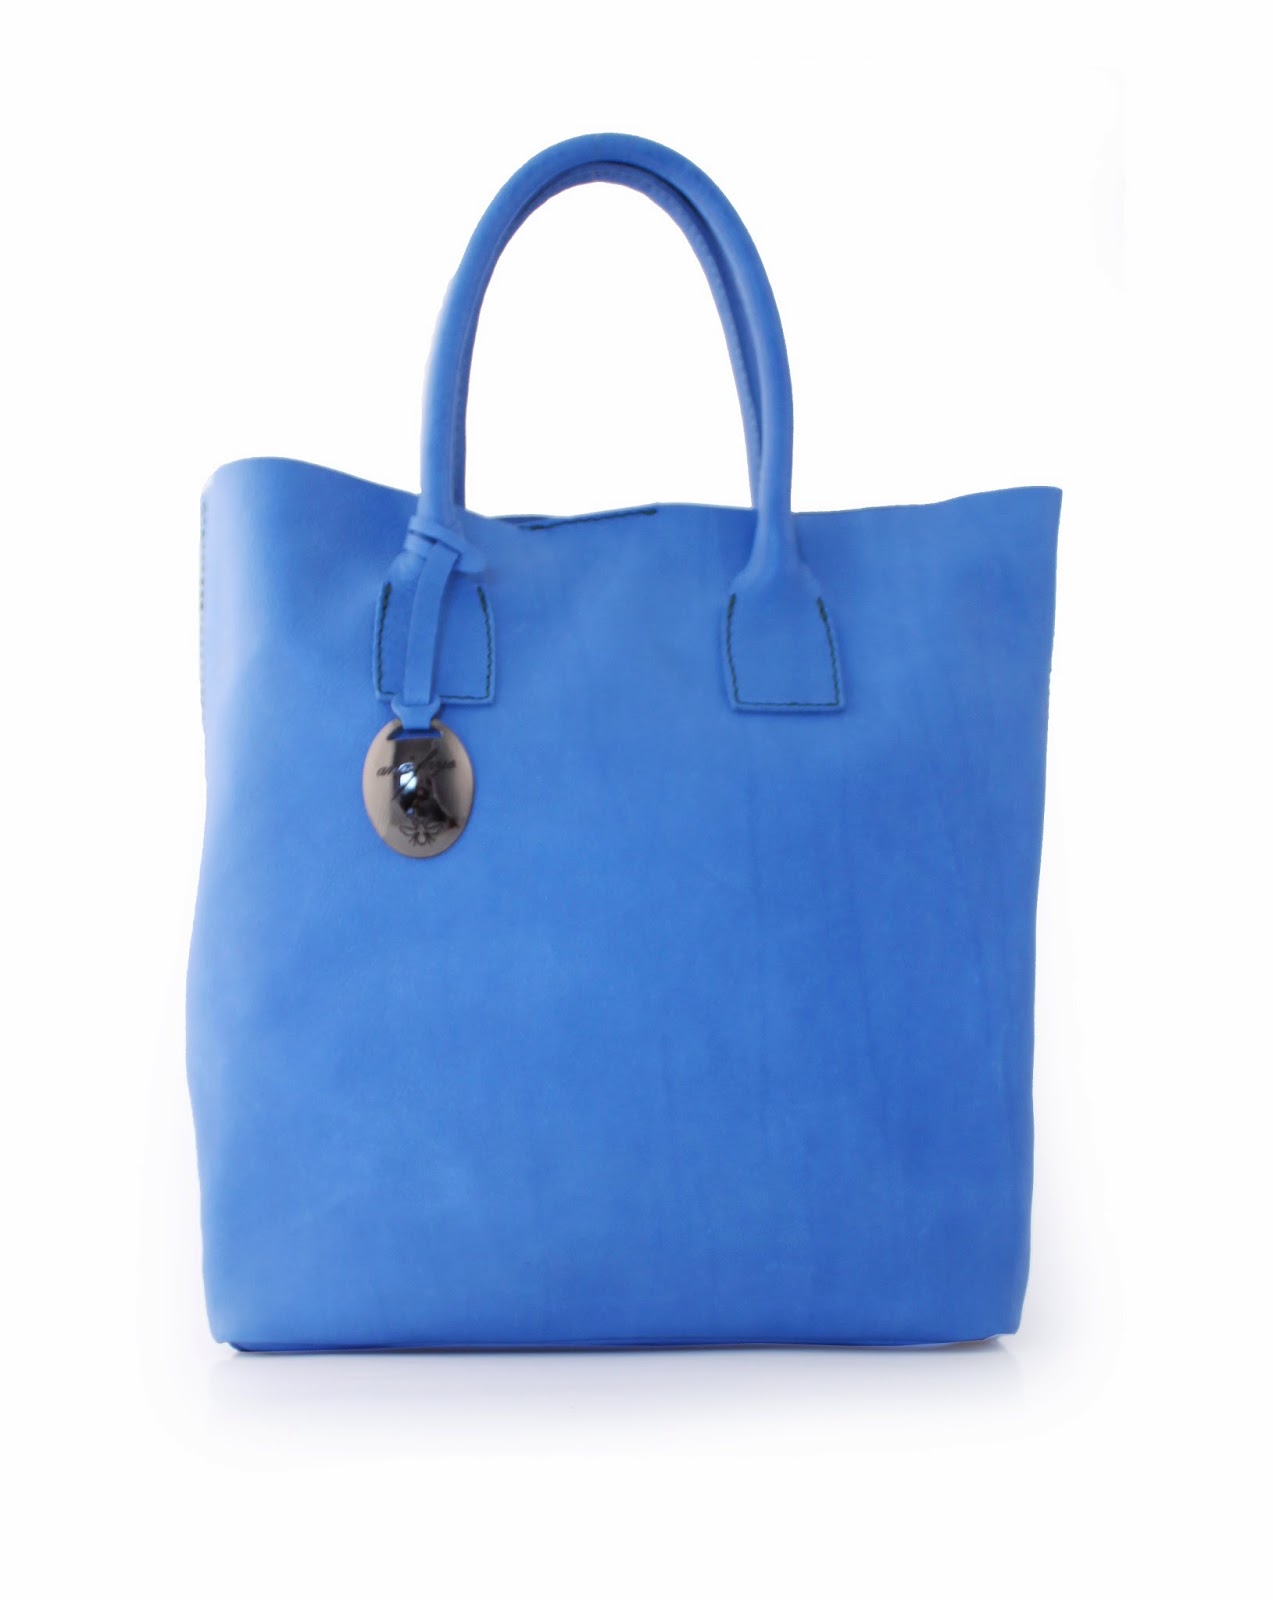 Forever Fabulous: Ana Faye - Irish Handbag Designer - Spring Summer 2014